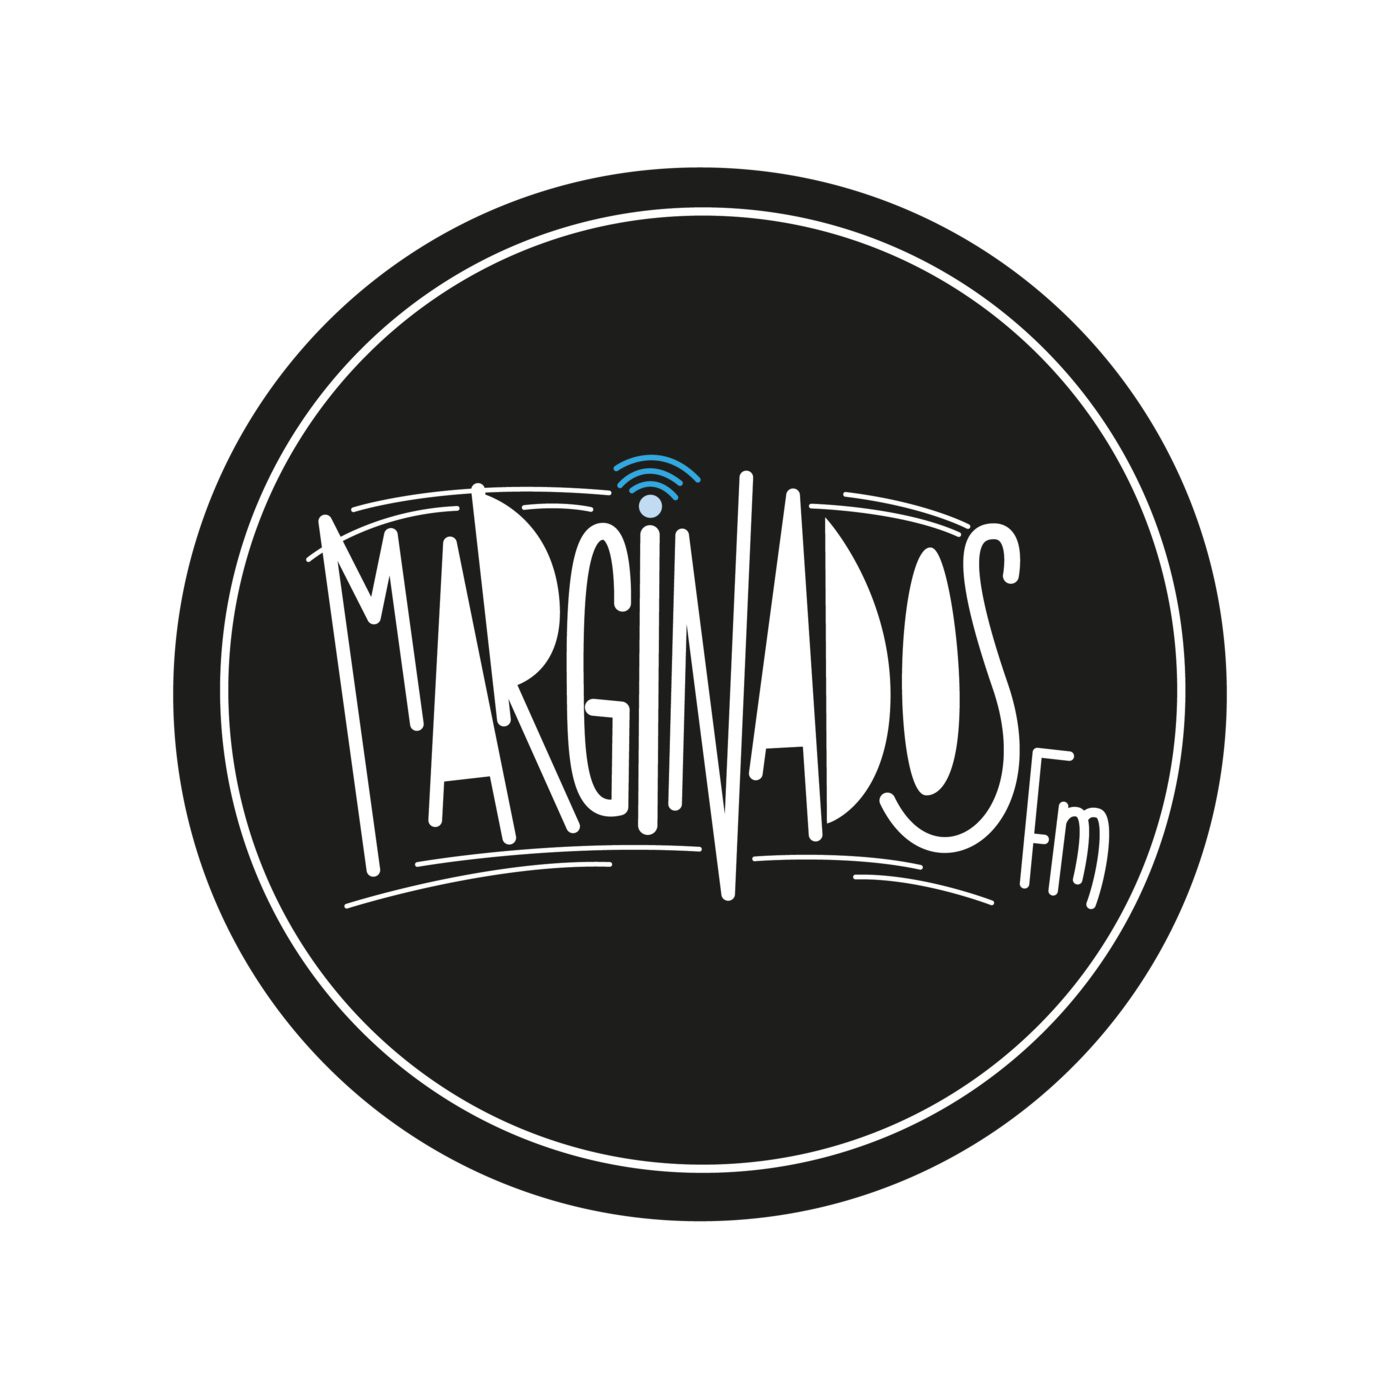 MARGINADOS fm 27-05-14